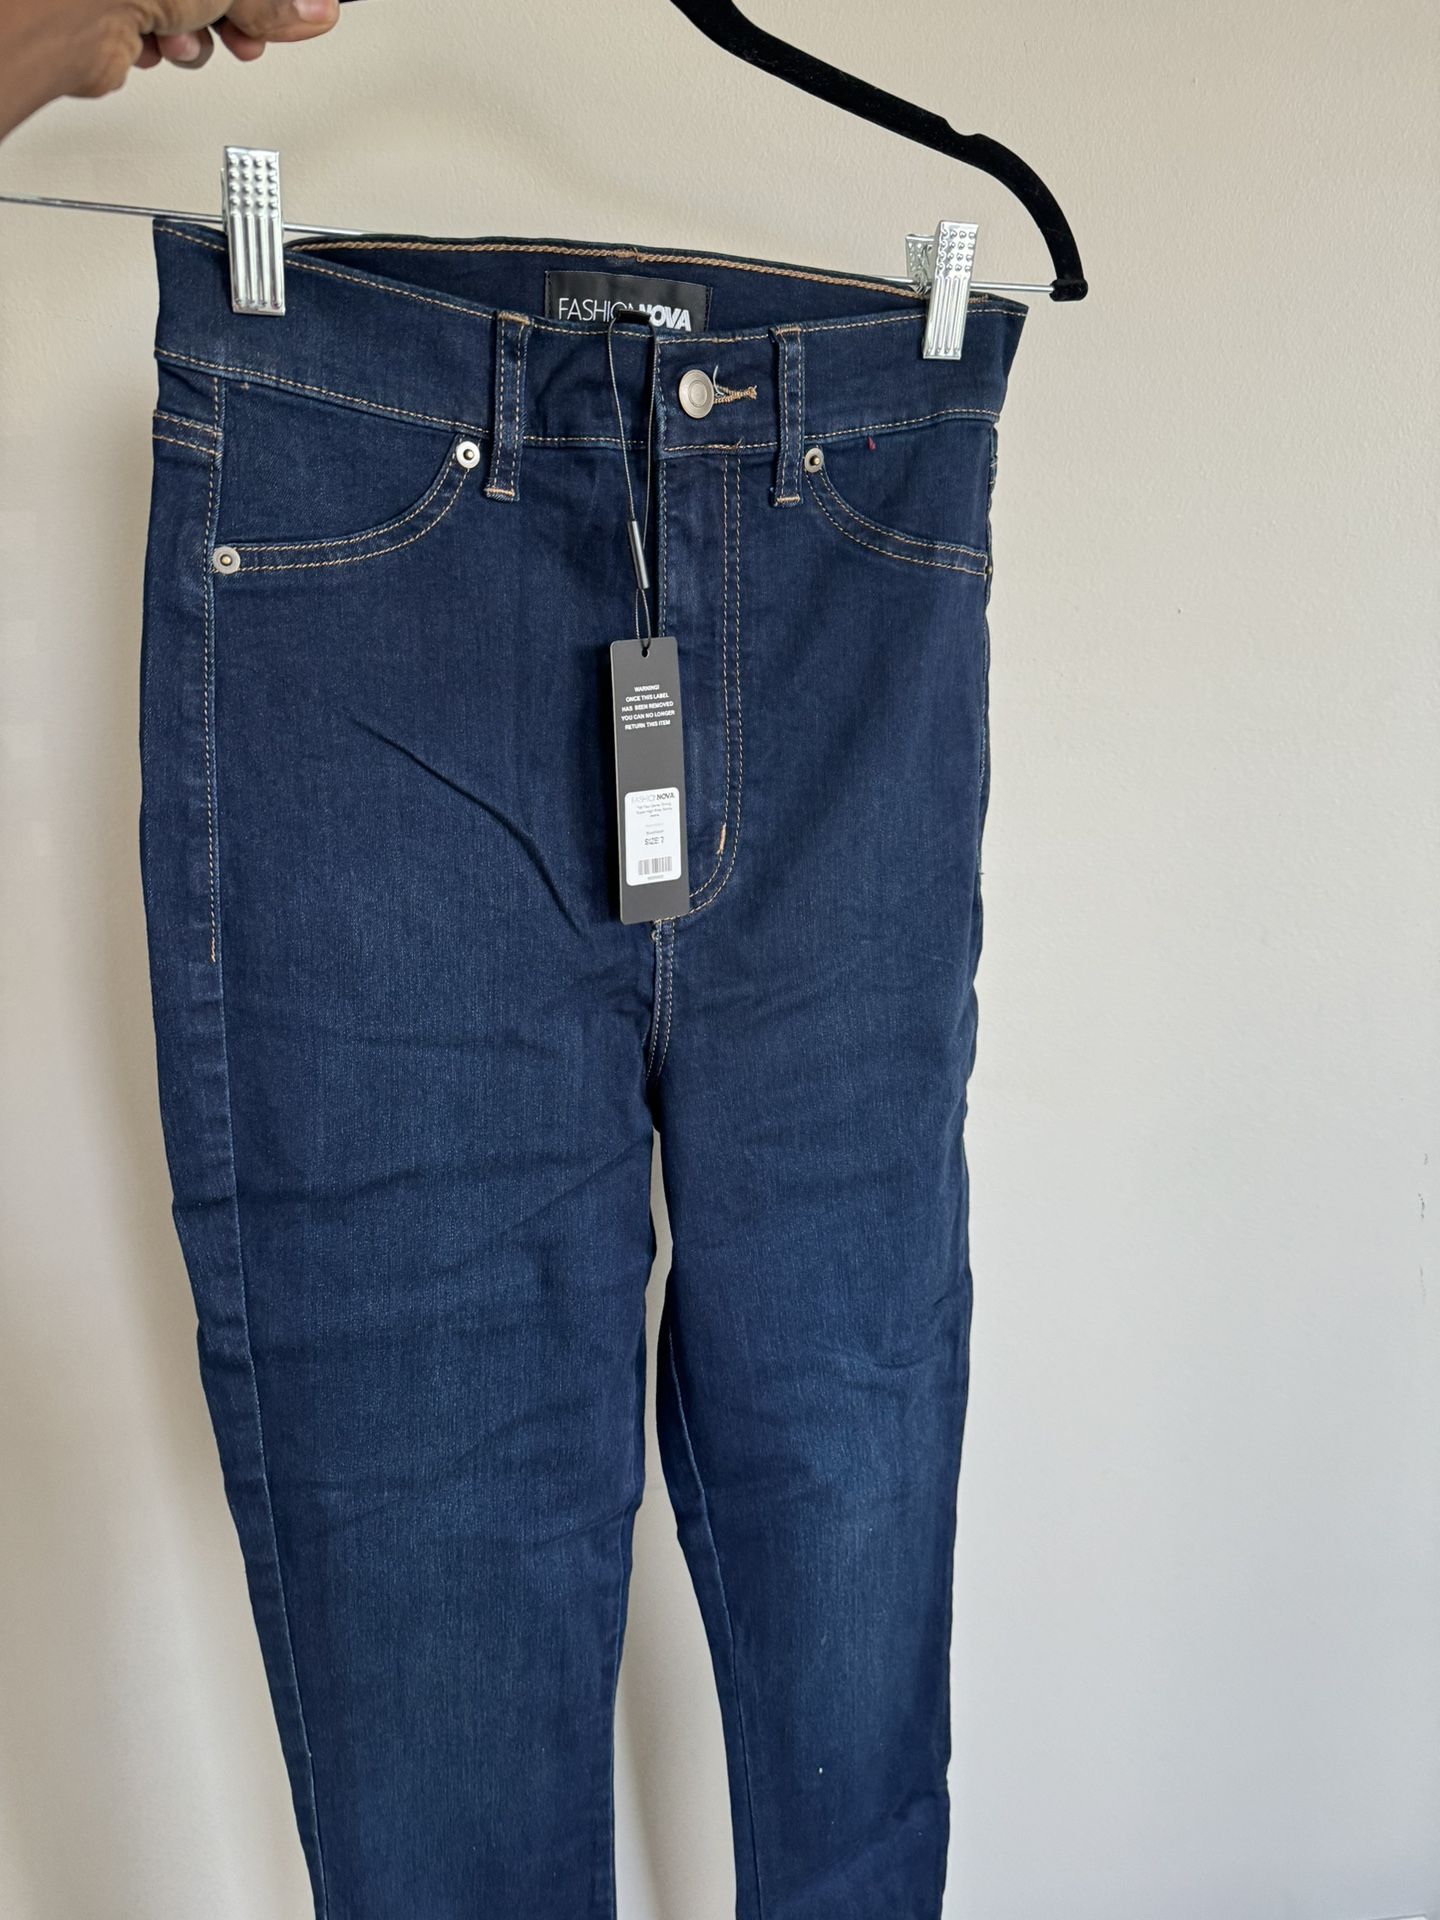 Fashion Nova High rise skinny jeans Dark Blue (Size 7)